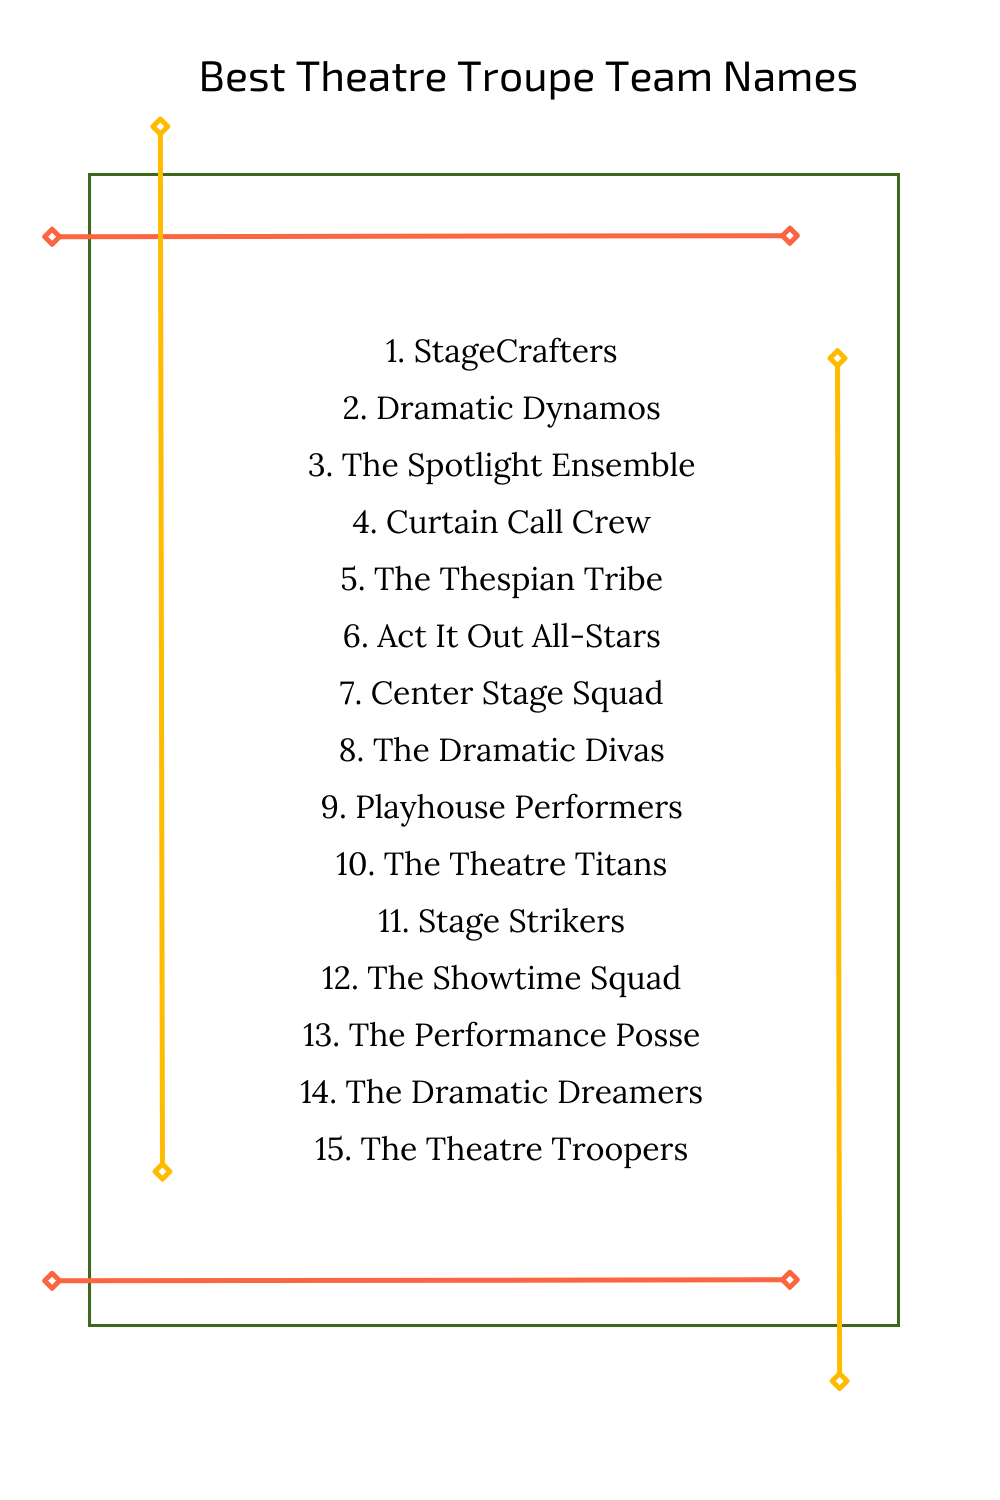 Best Theatre Troupe Team Names